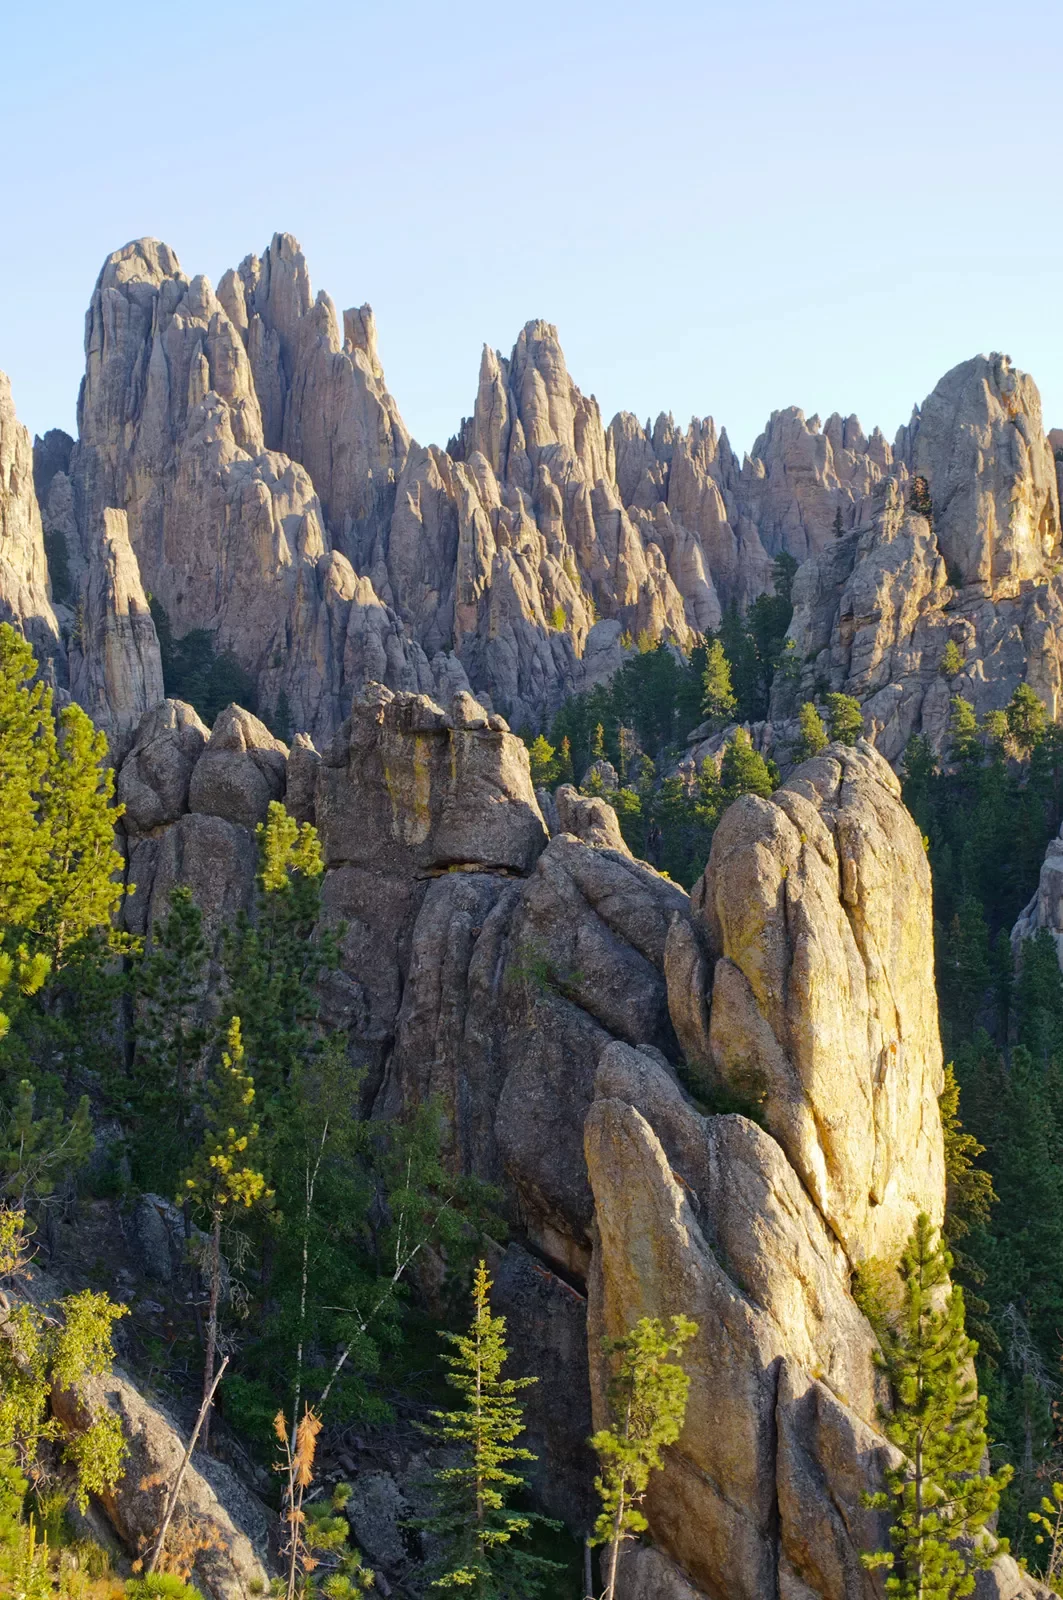 View of unique rock formation